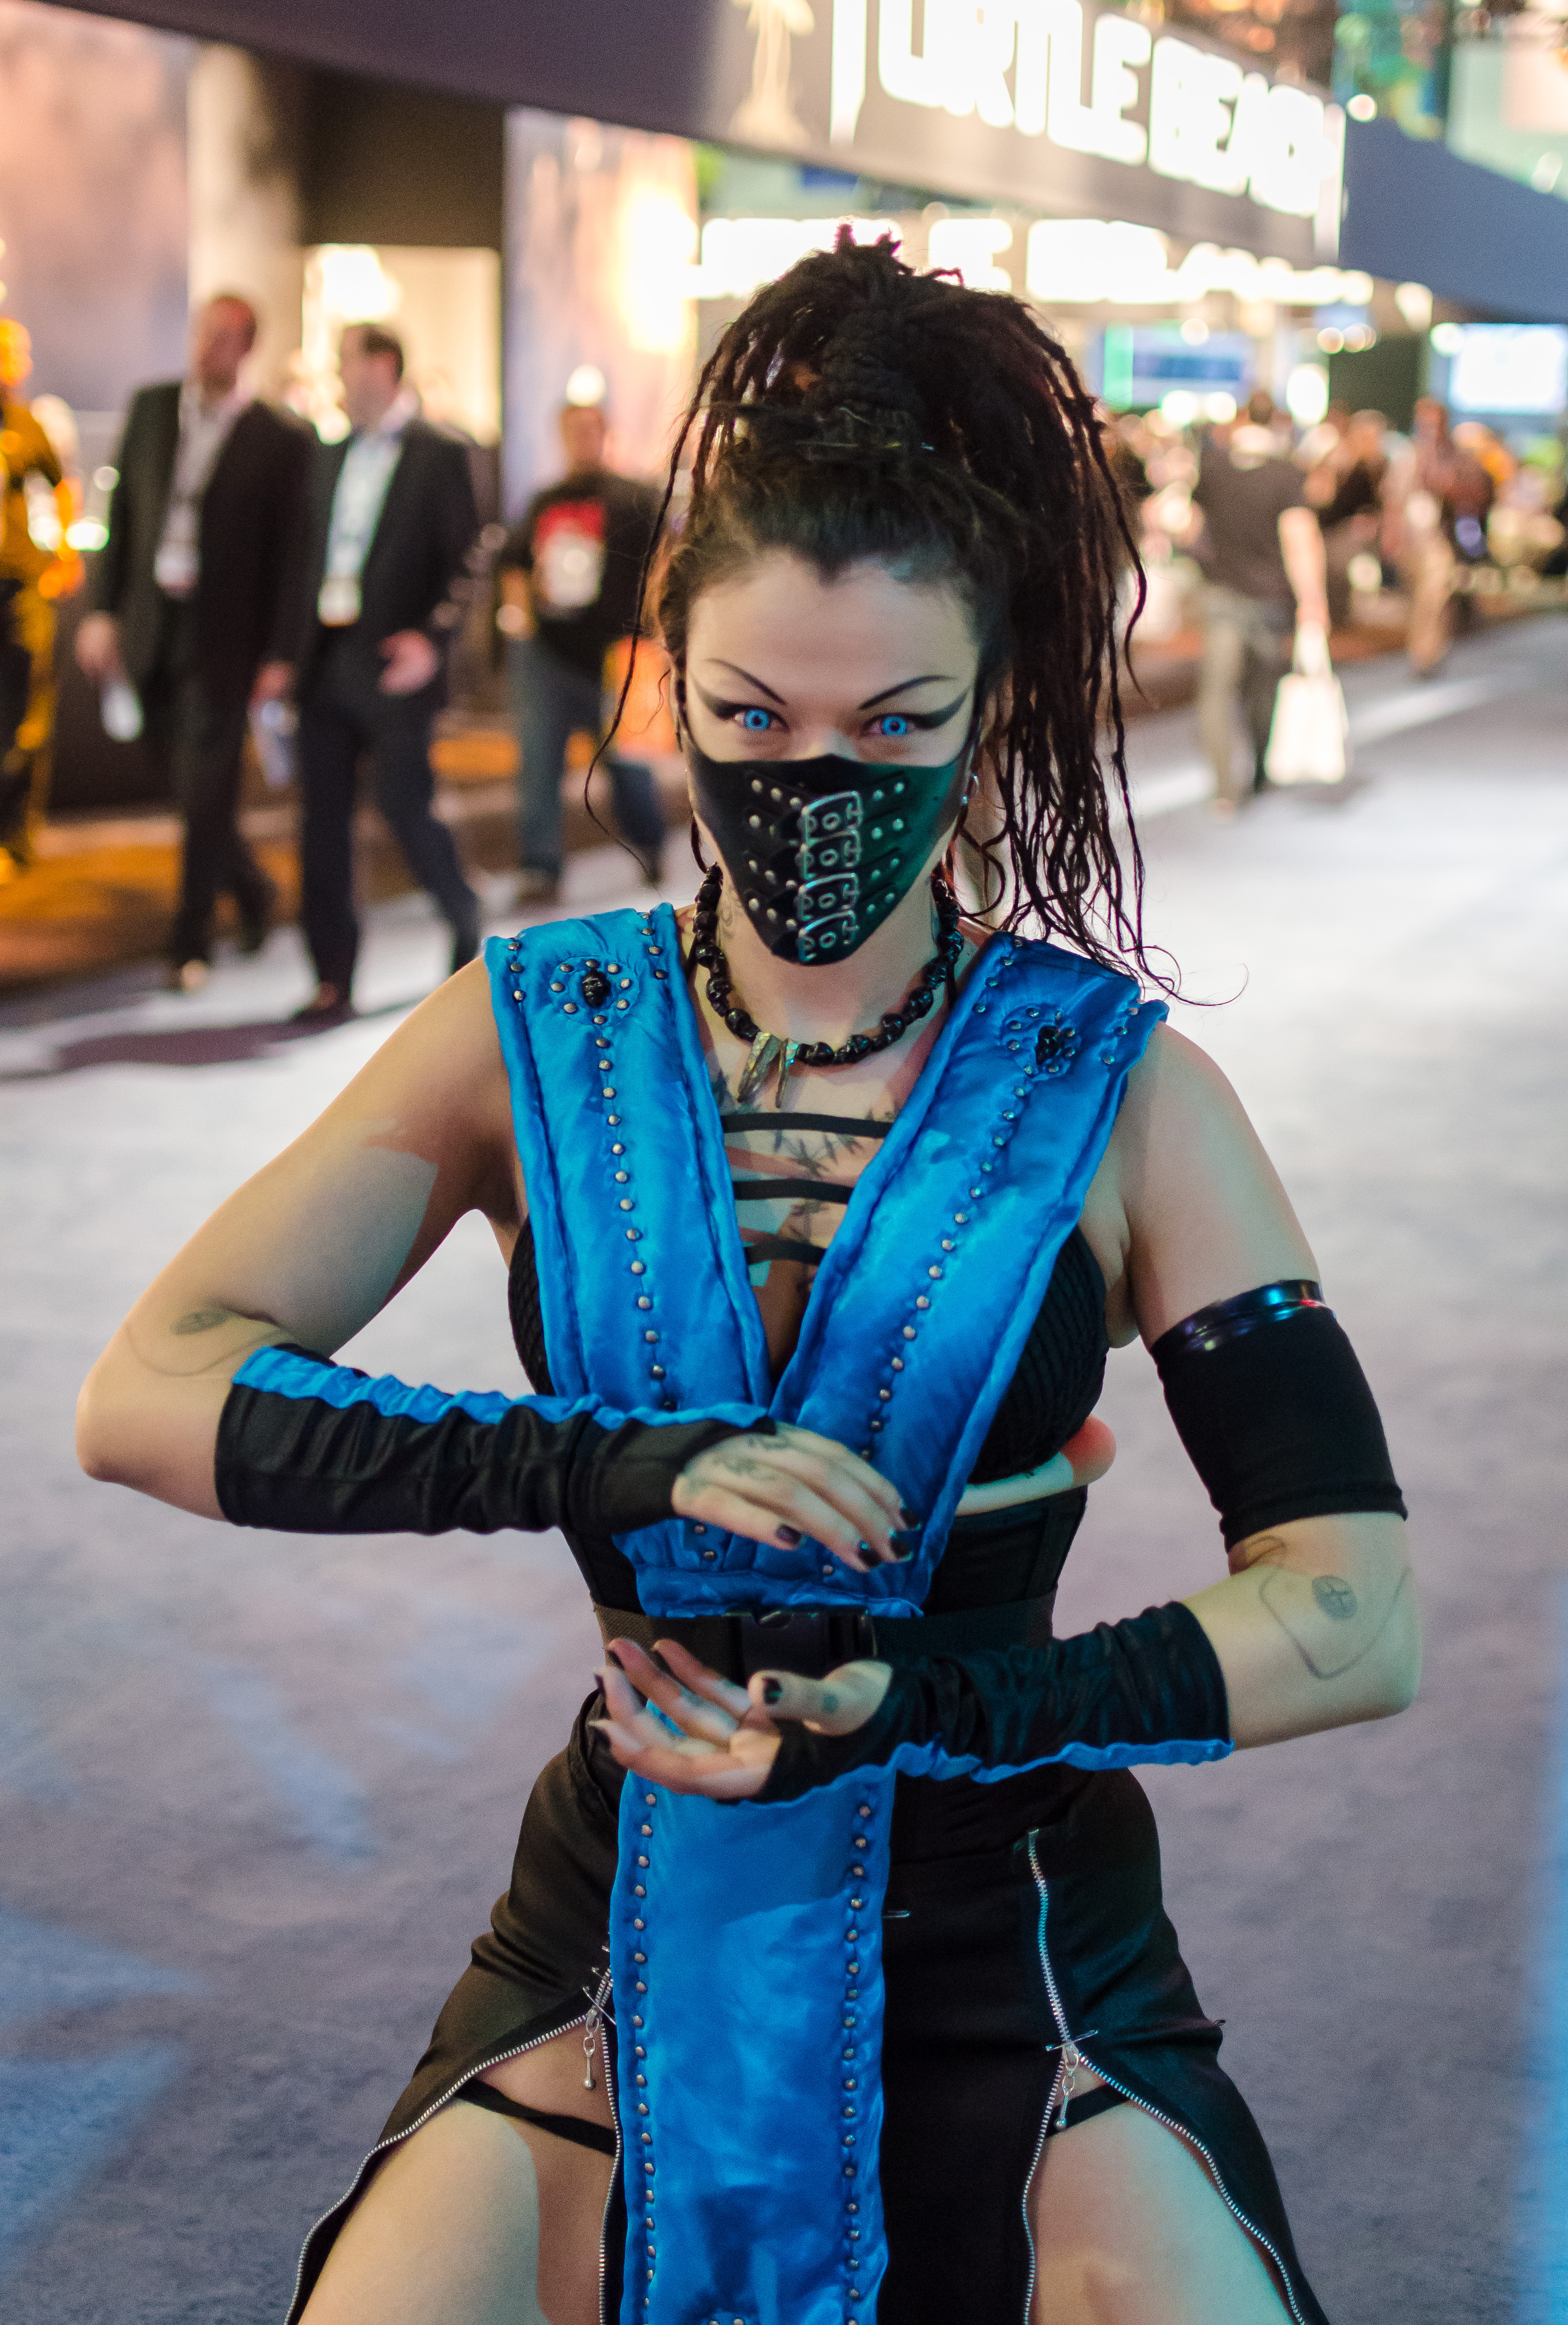 Mortal Kombat cosplay girl at E3 2012.jpg. 